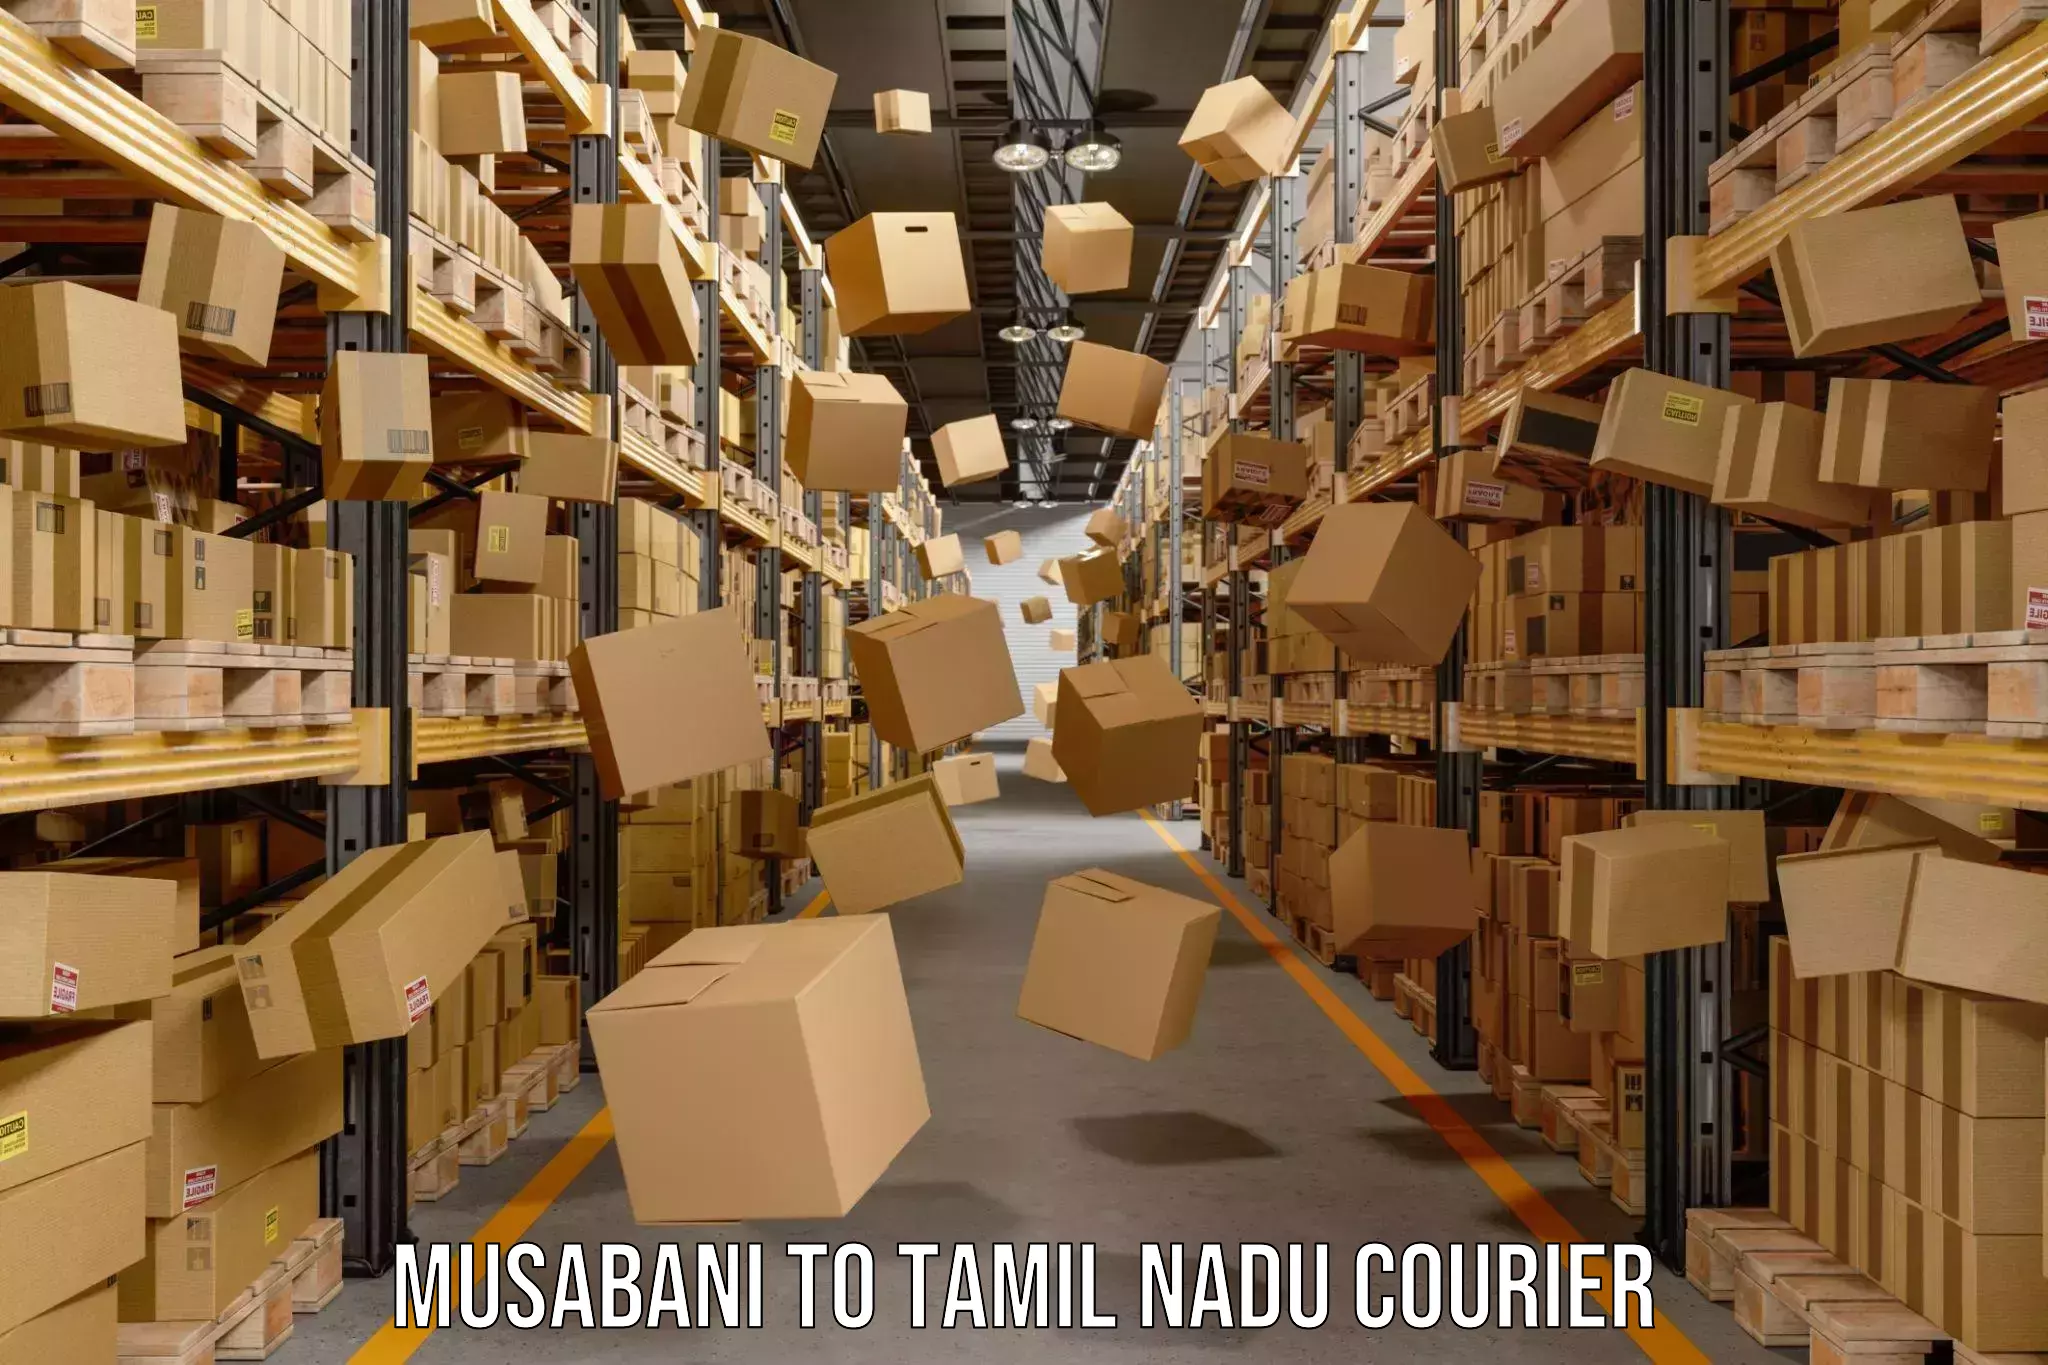 Courier service innovation Musabani to Tamil Nadu